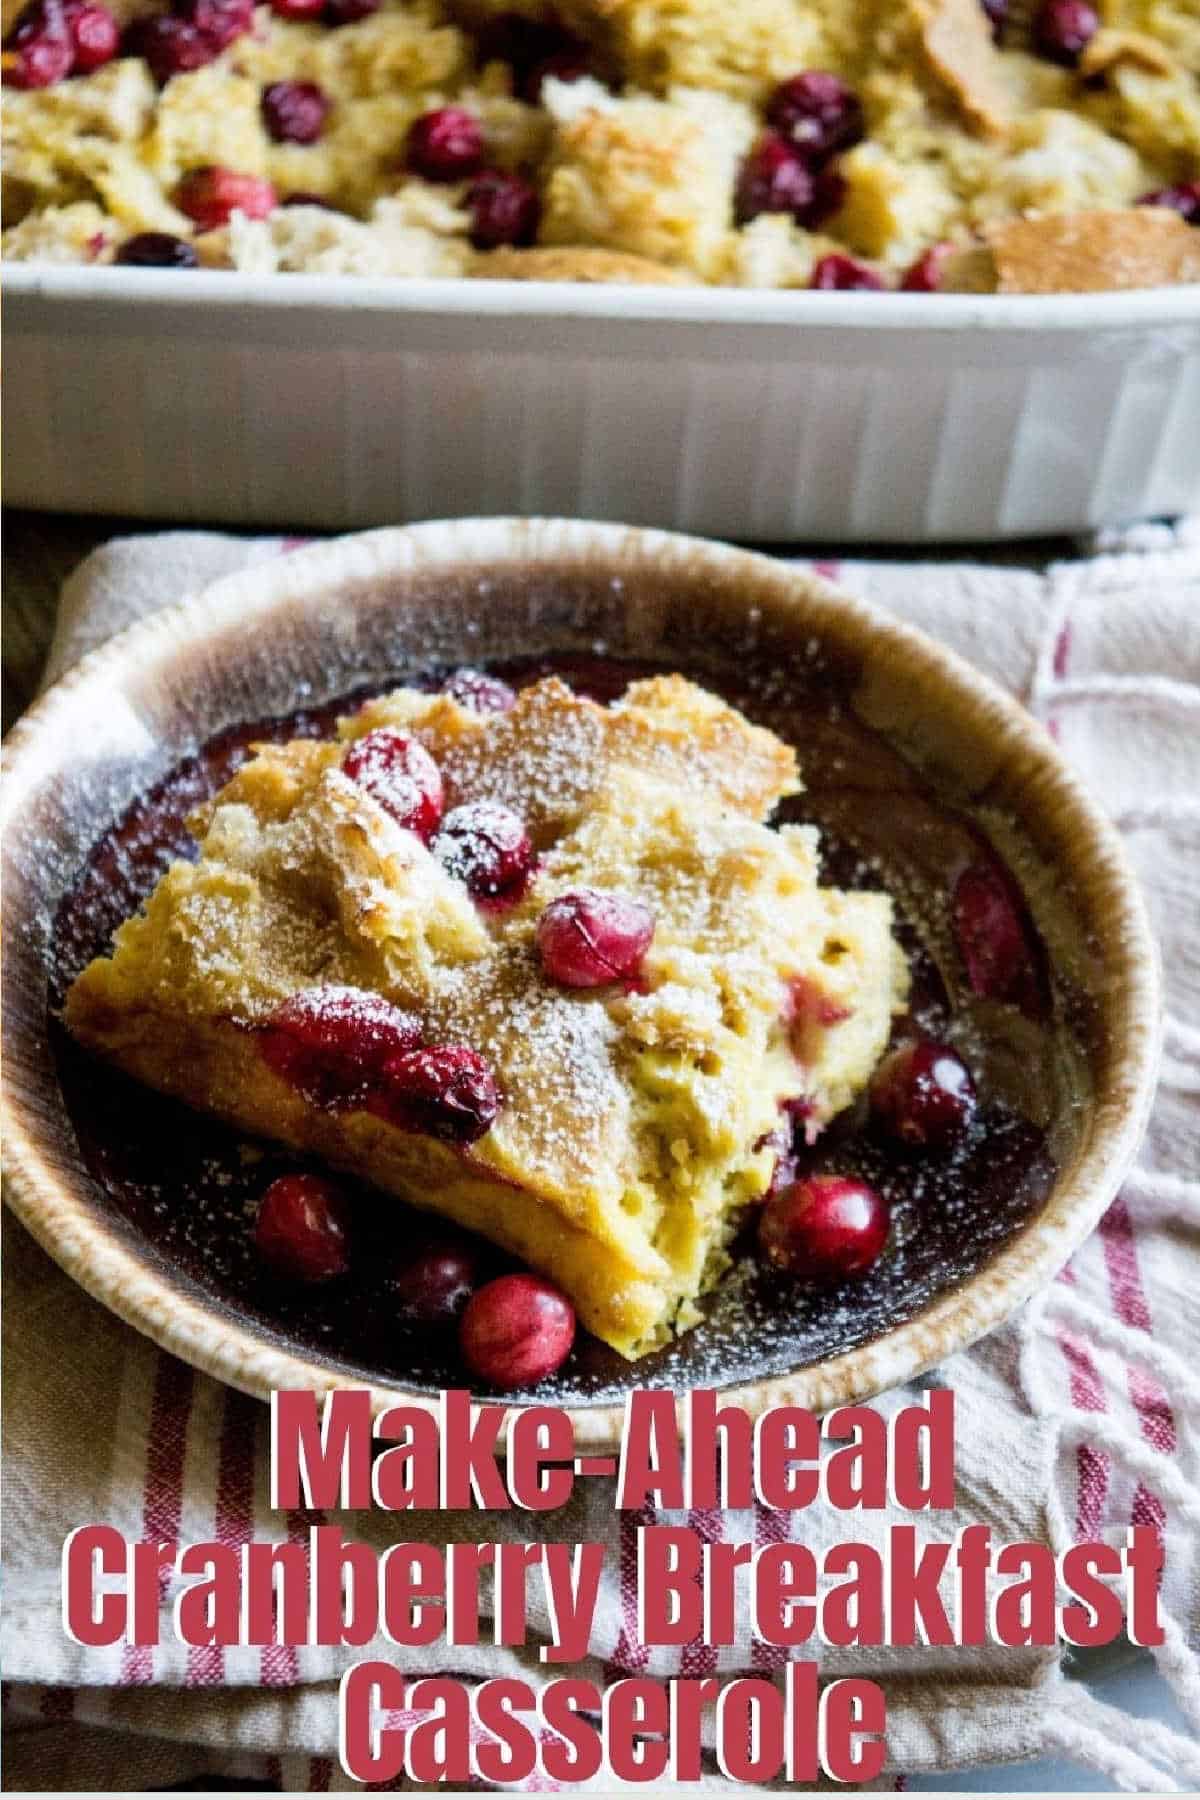 MAKE-AHEAD CRANBERRY EGGNOG BAKE (CHRISTMAS BREAKFAST CASSEROLE) featured image